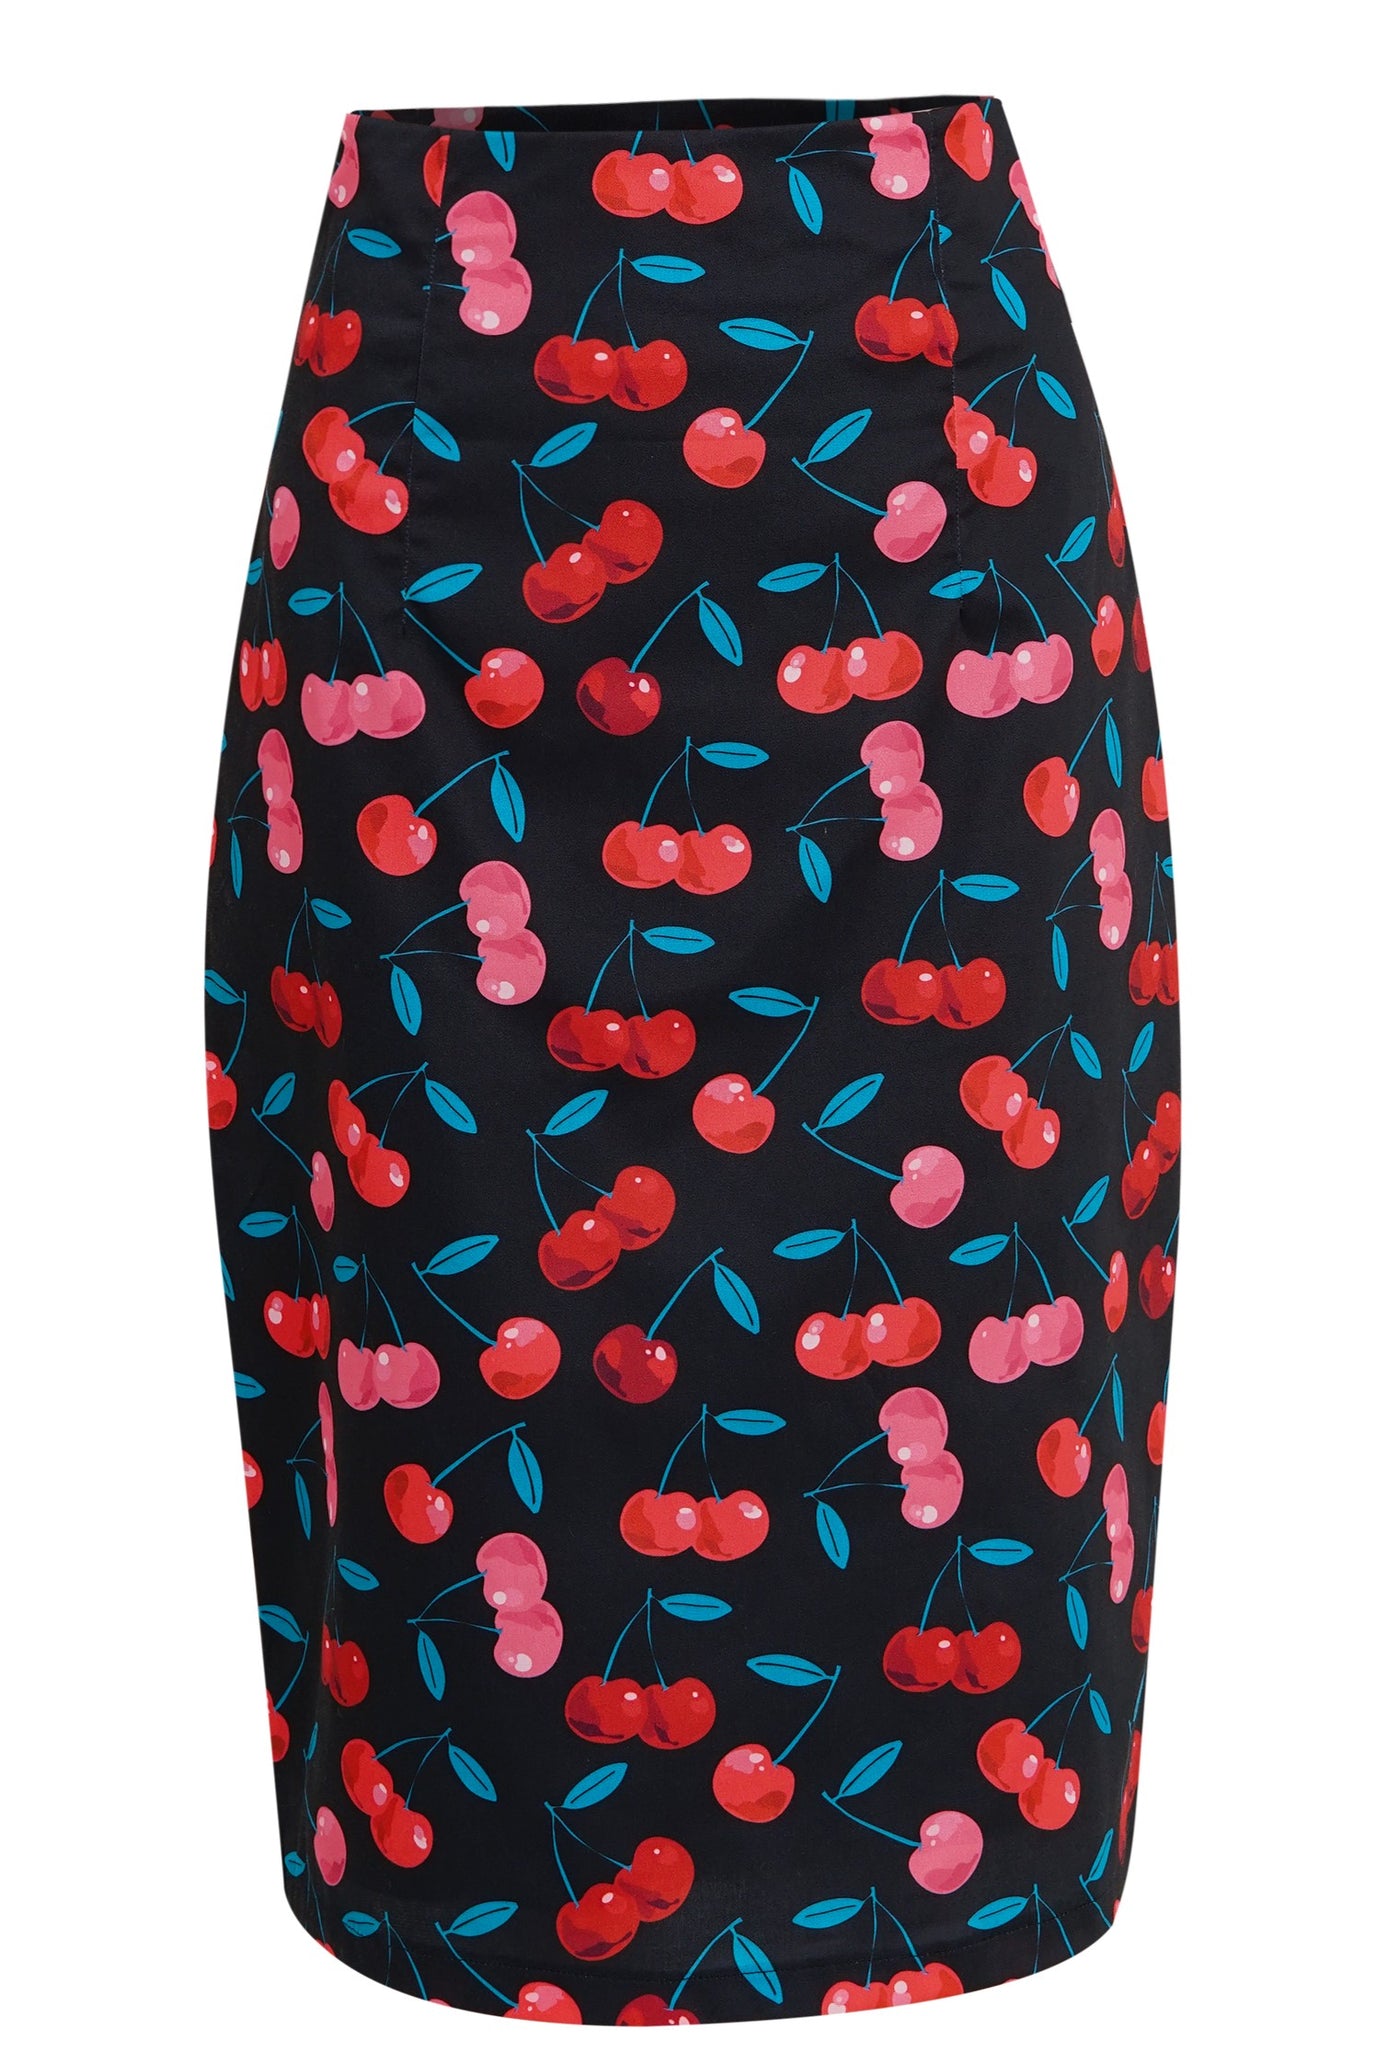 Falda Black & Red Cherry Pencil Skirt